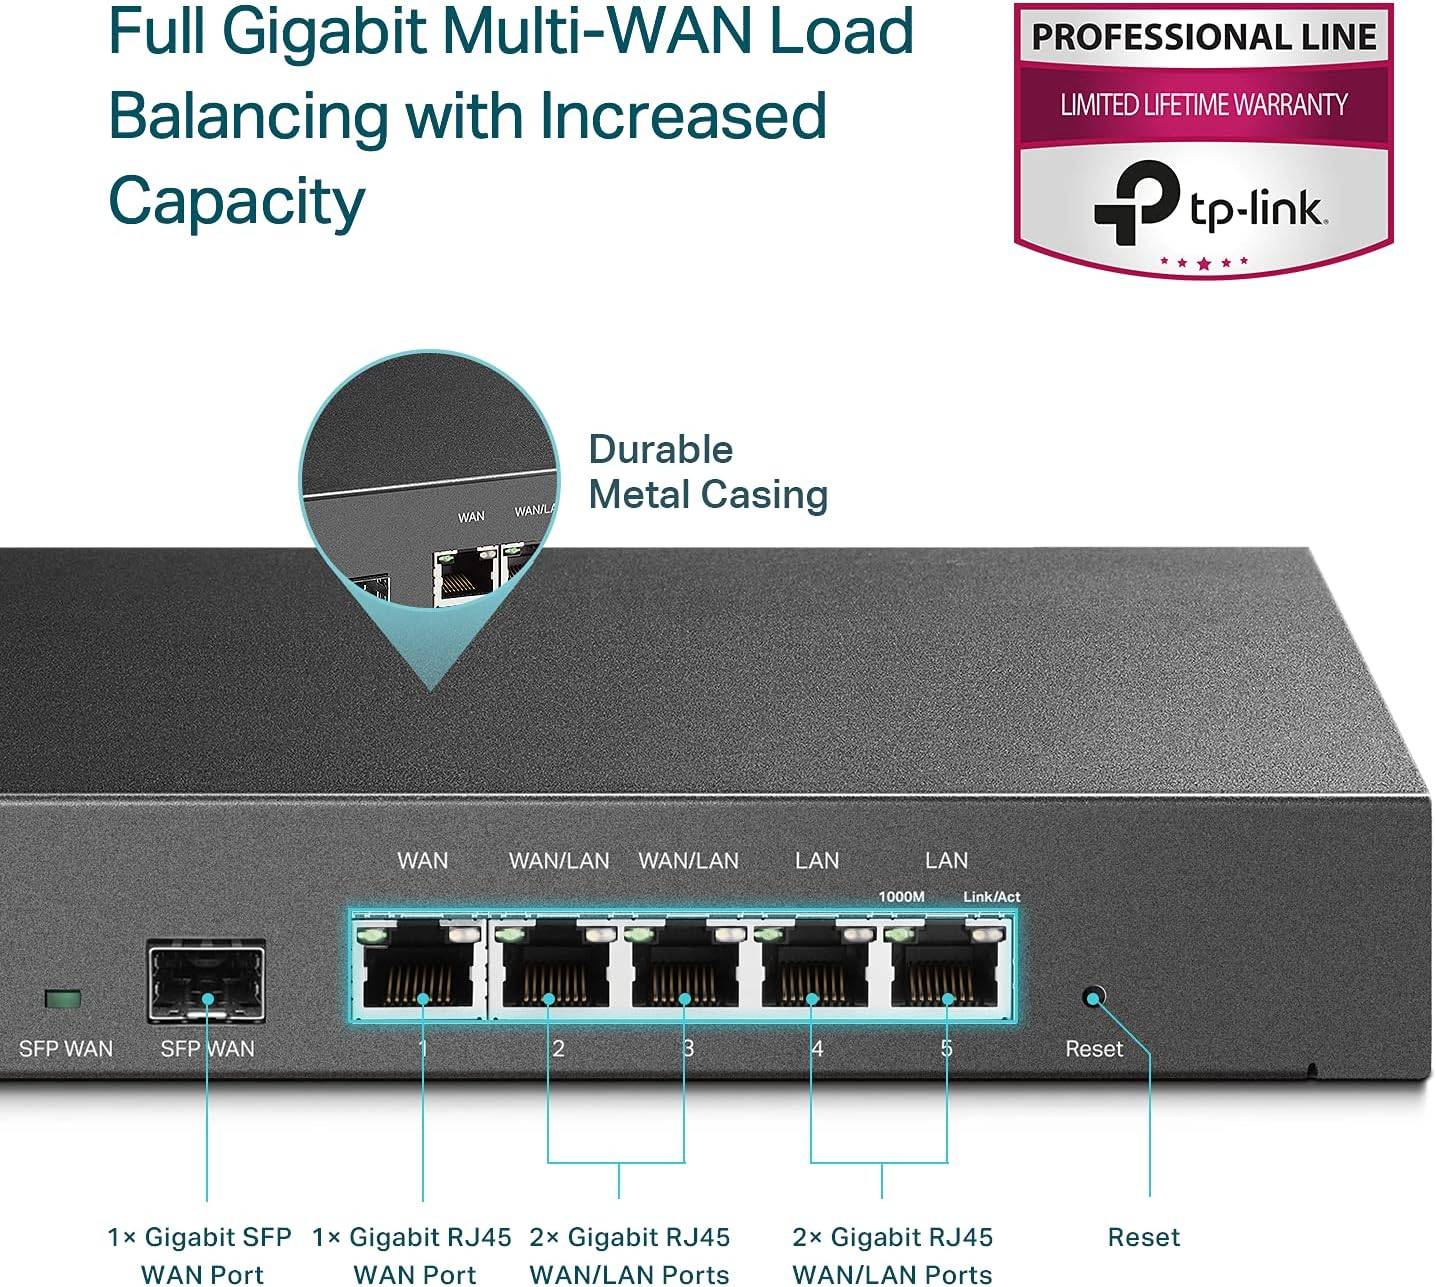 TP-Link ER7206 Multi-WAN Router Gigabit VPN TL-ER7206